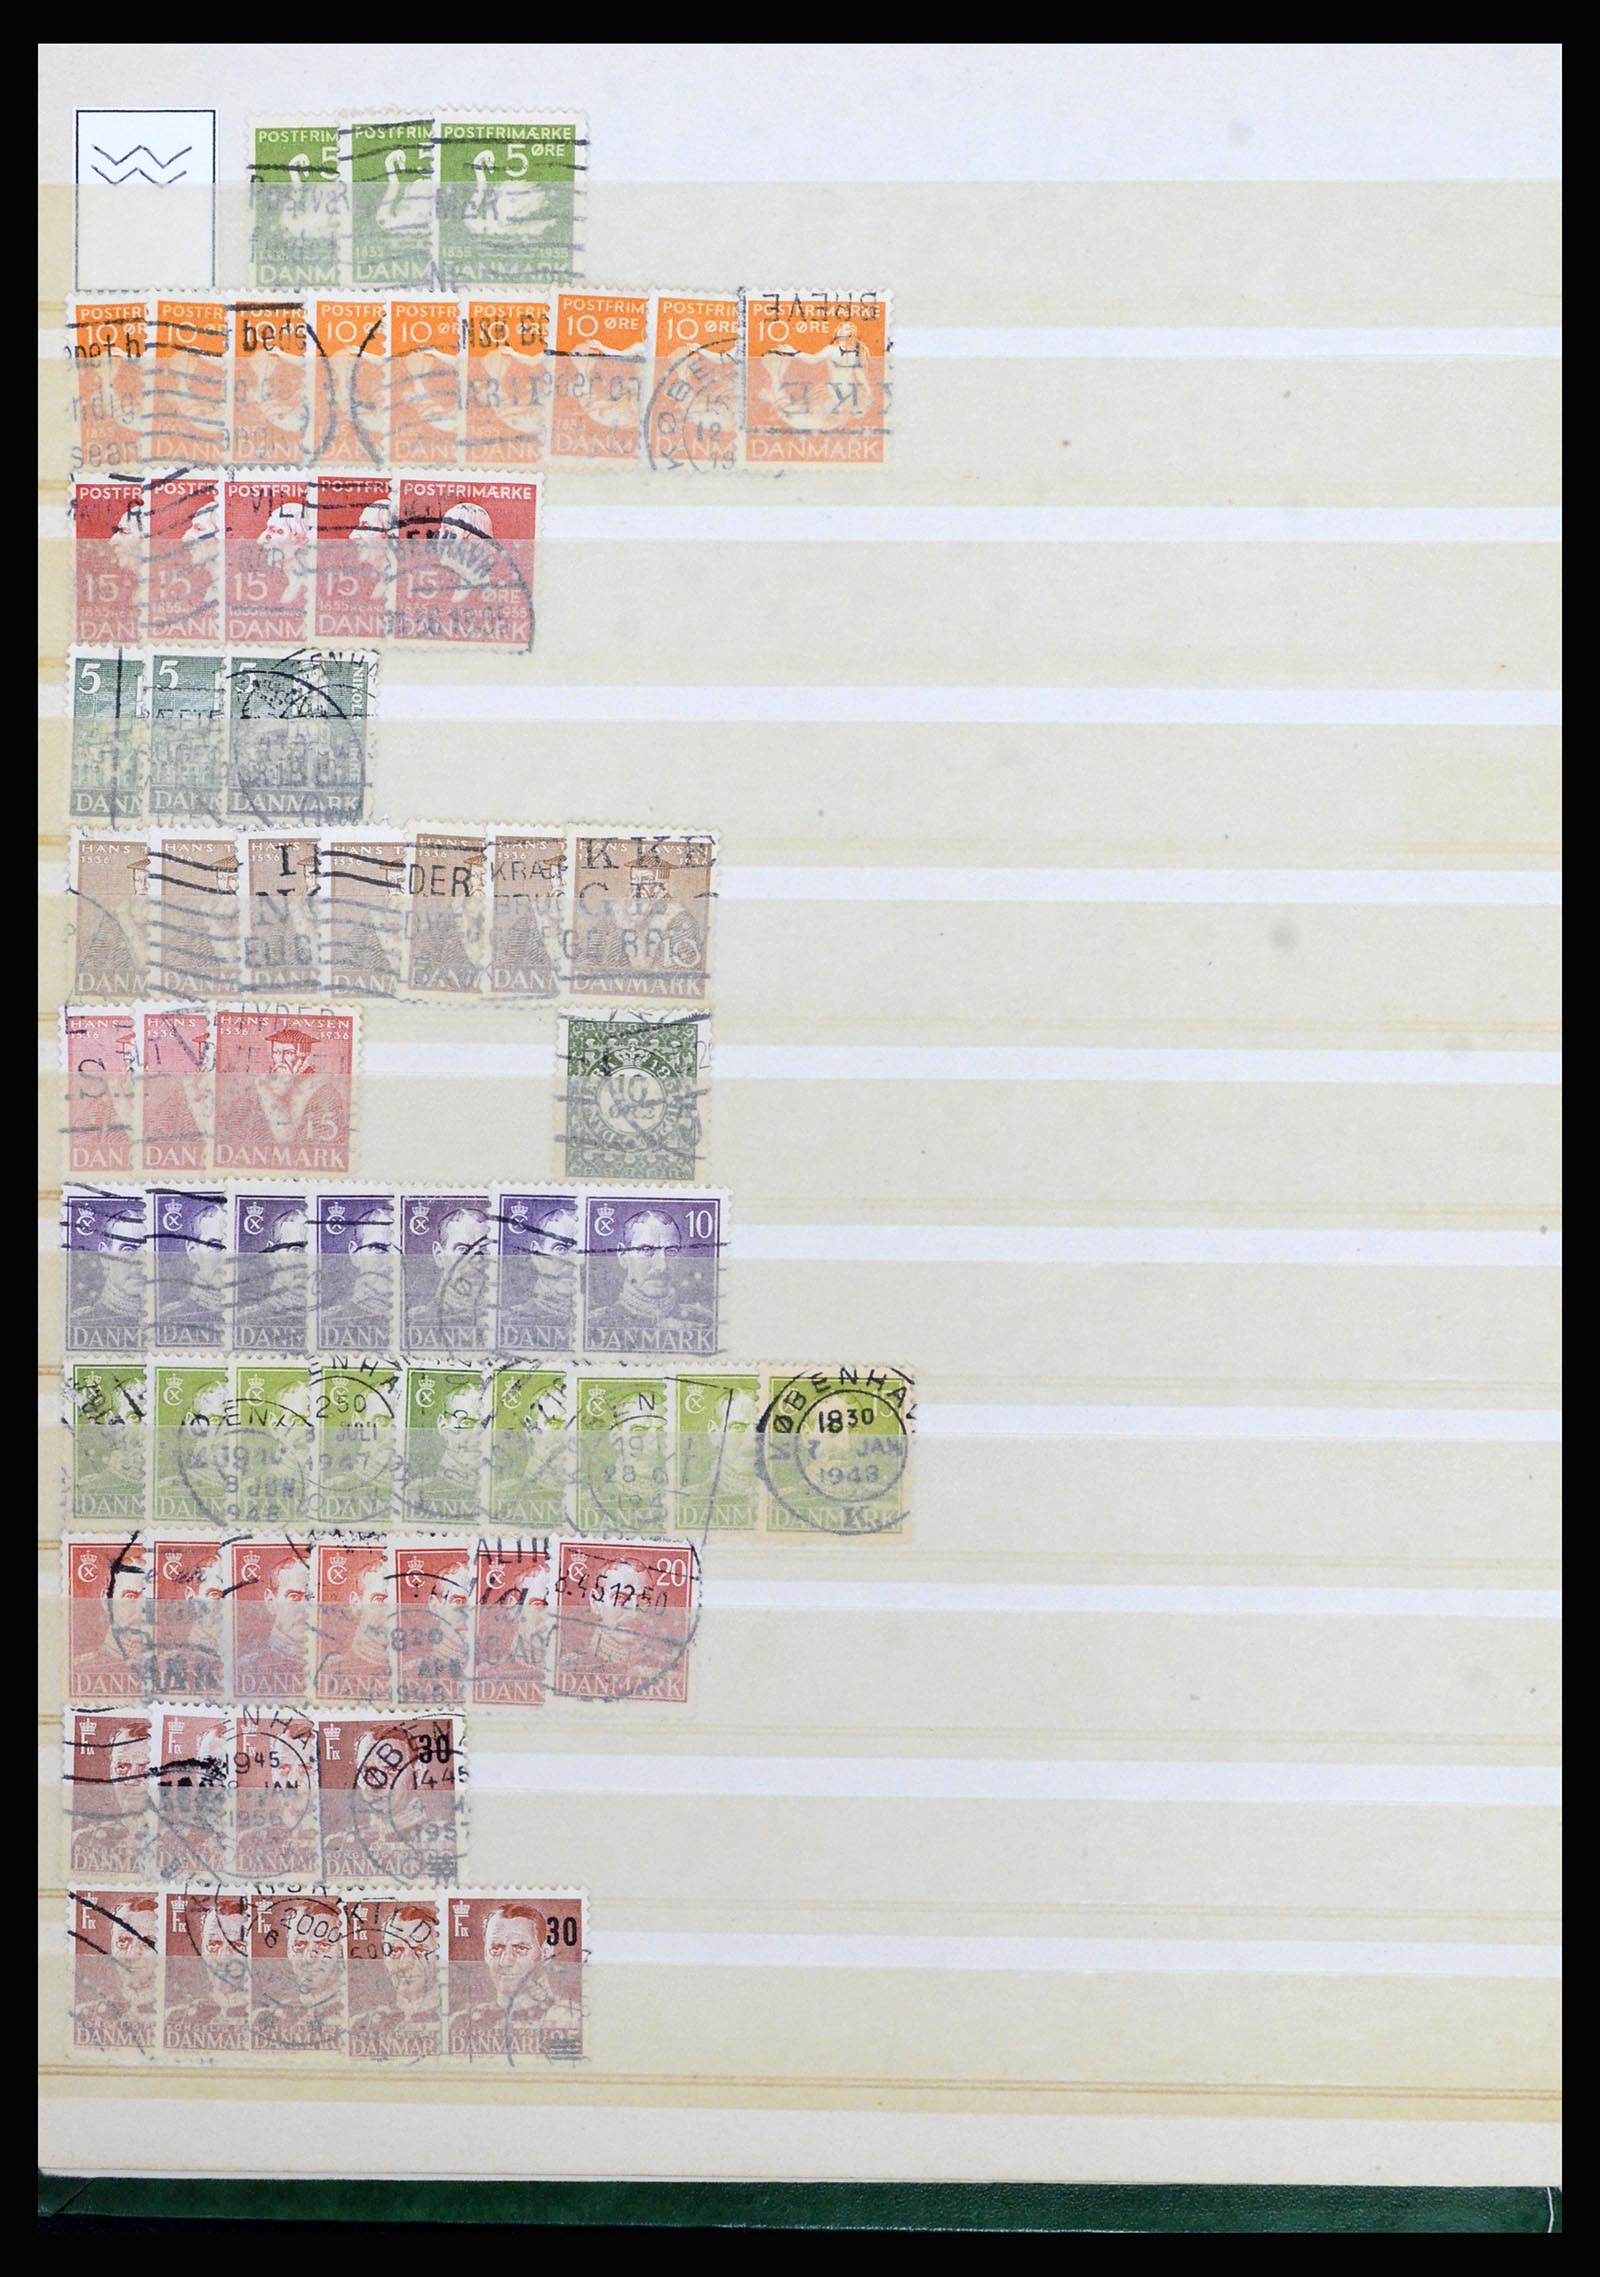 37056 027 - Stamp collection 37056 Denmark perfins.